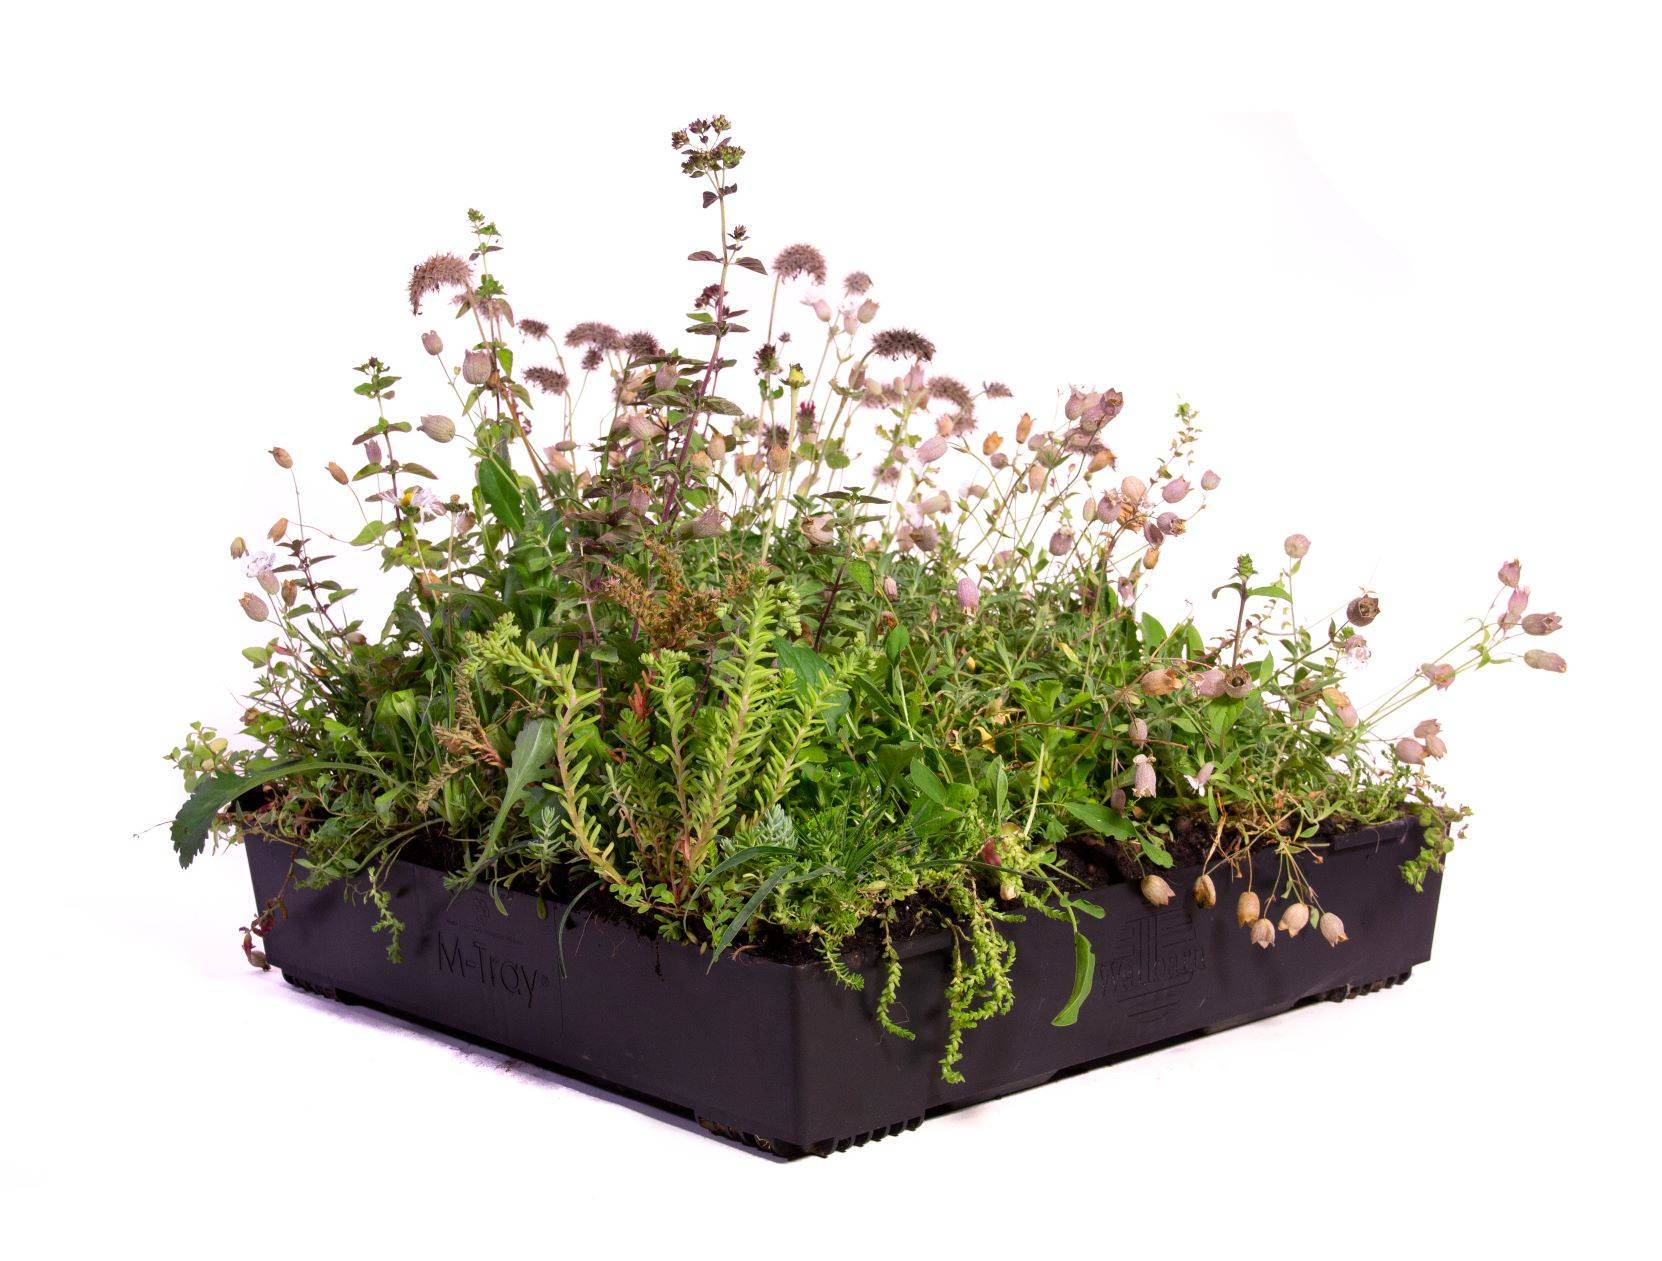 M-Tray® Wildflower Modular Green Roof System - Wildflower Species